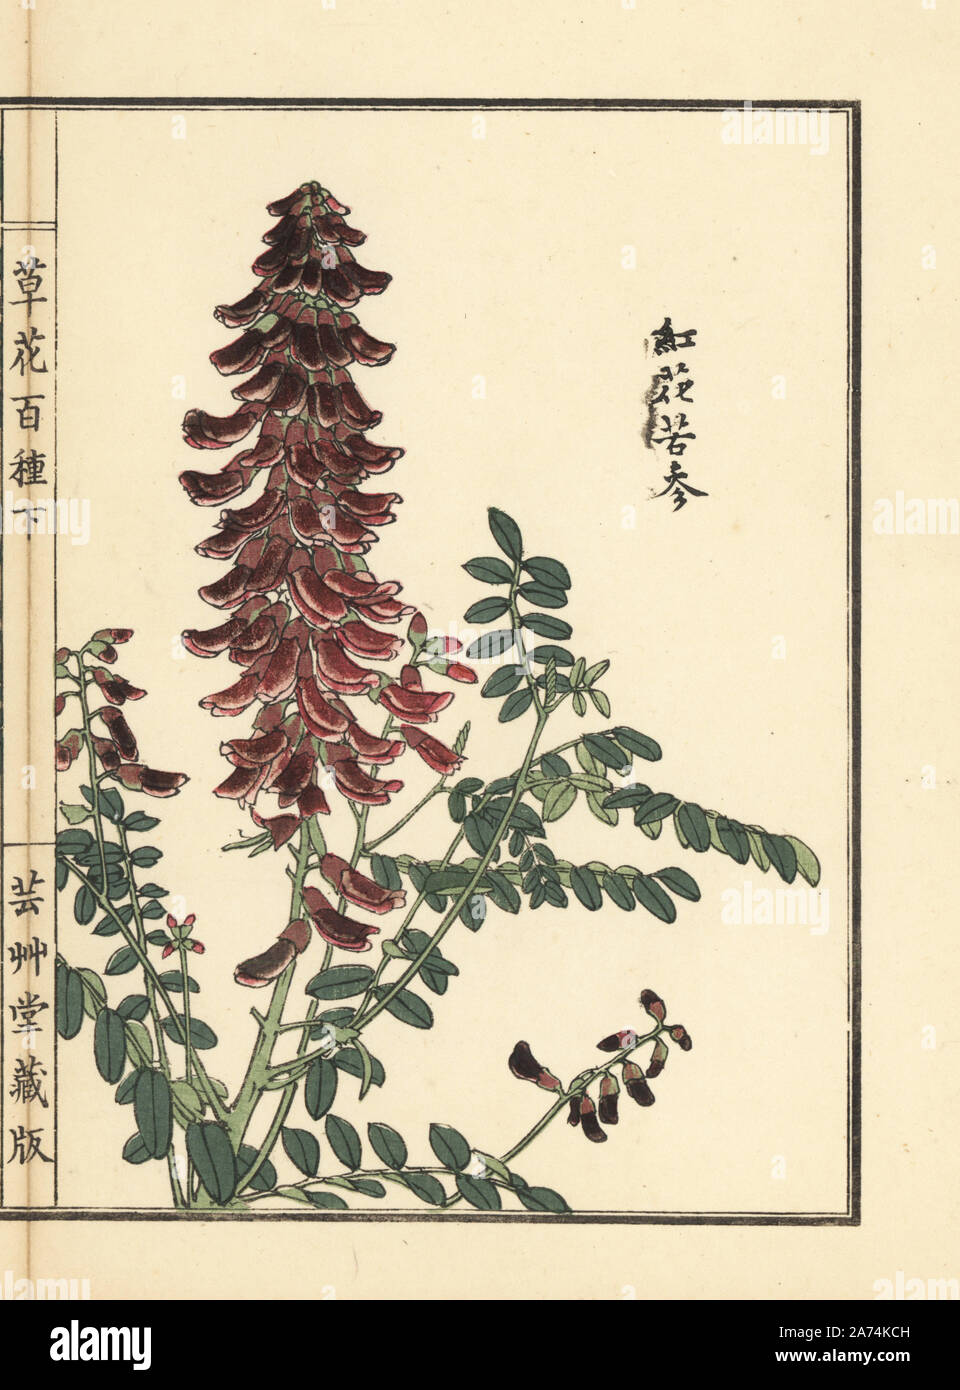 Kouka or kujin, Sophora flavescens. Root used in Chinese medicine as ku shen. Handcoloured woodblock print by Kono Bairei from Kusa Bana Hyakushu (One Hundred Varieties of Flowers), Tokyo, Yamada, 1901. Stock Photo